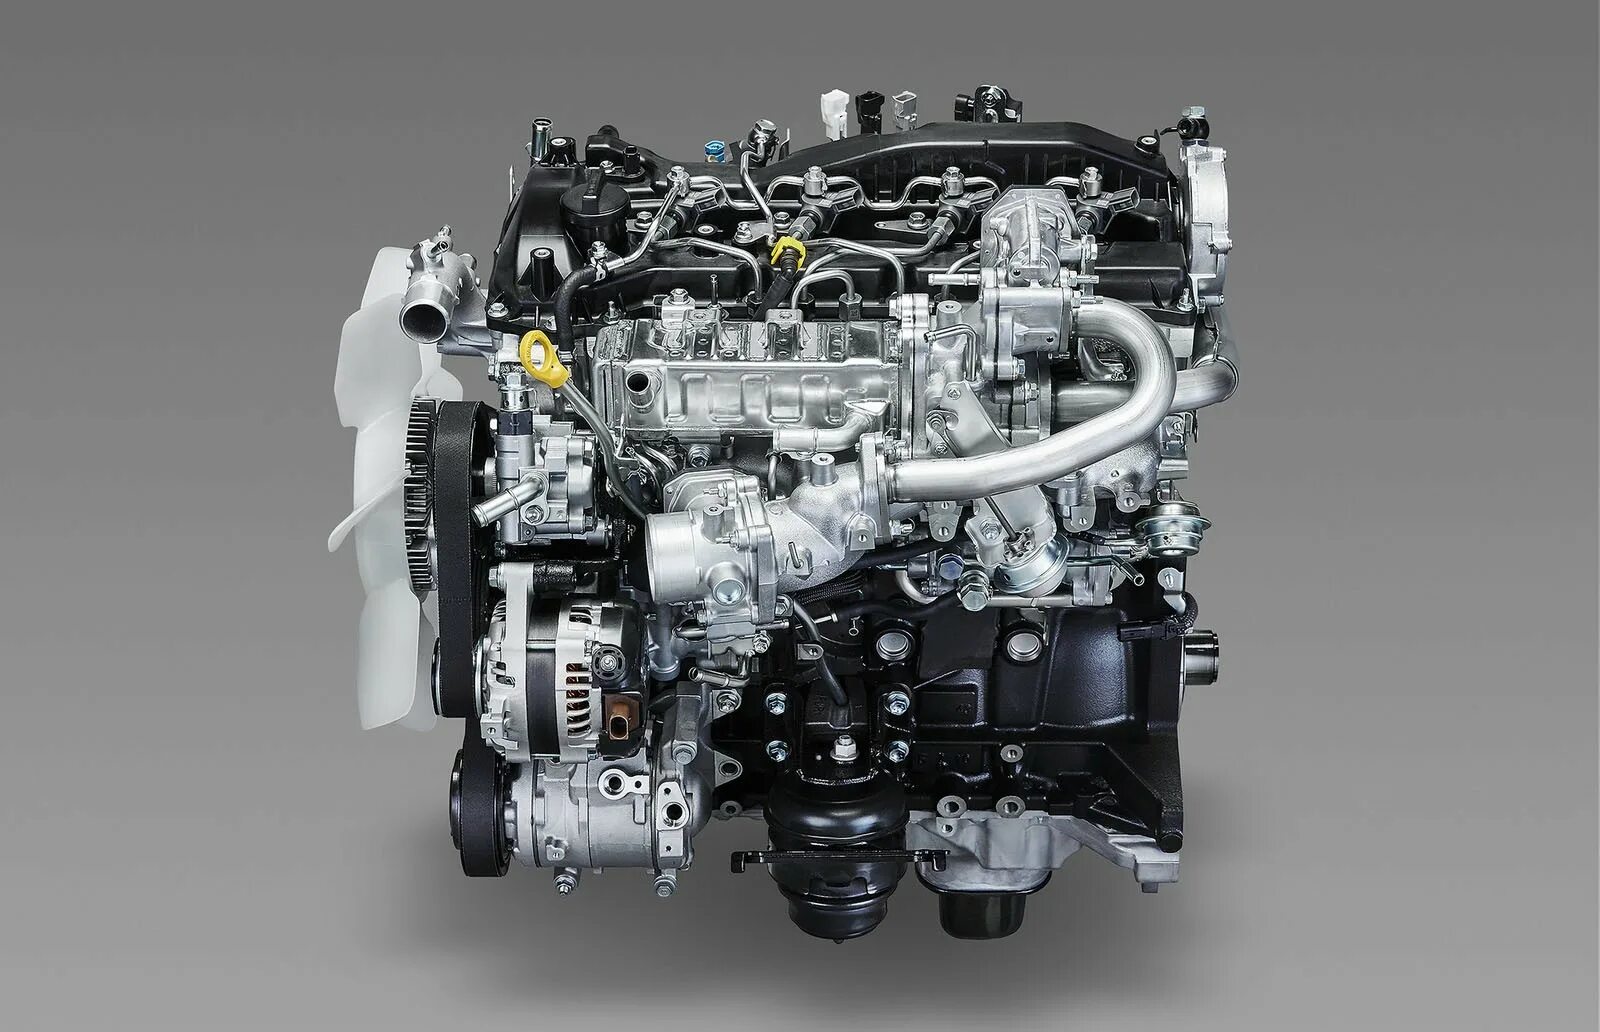 Toyota Hilux 2.8 дизель 1gd-FTV. Двигатель Toyota 1gd-FTV. Тойота Прадо дизель 2.8 (1gd-FTV). Дизельный двигатель Тойота 2.8. Дизельные моторы тойота